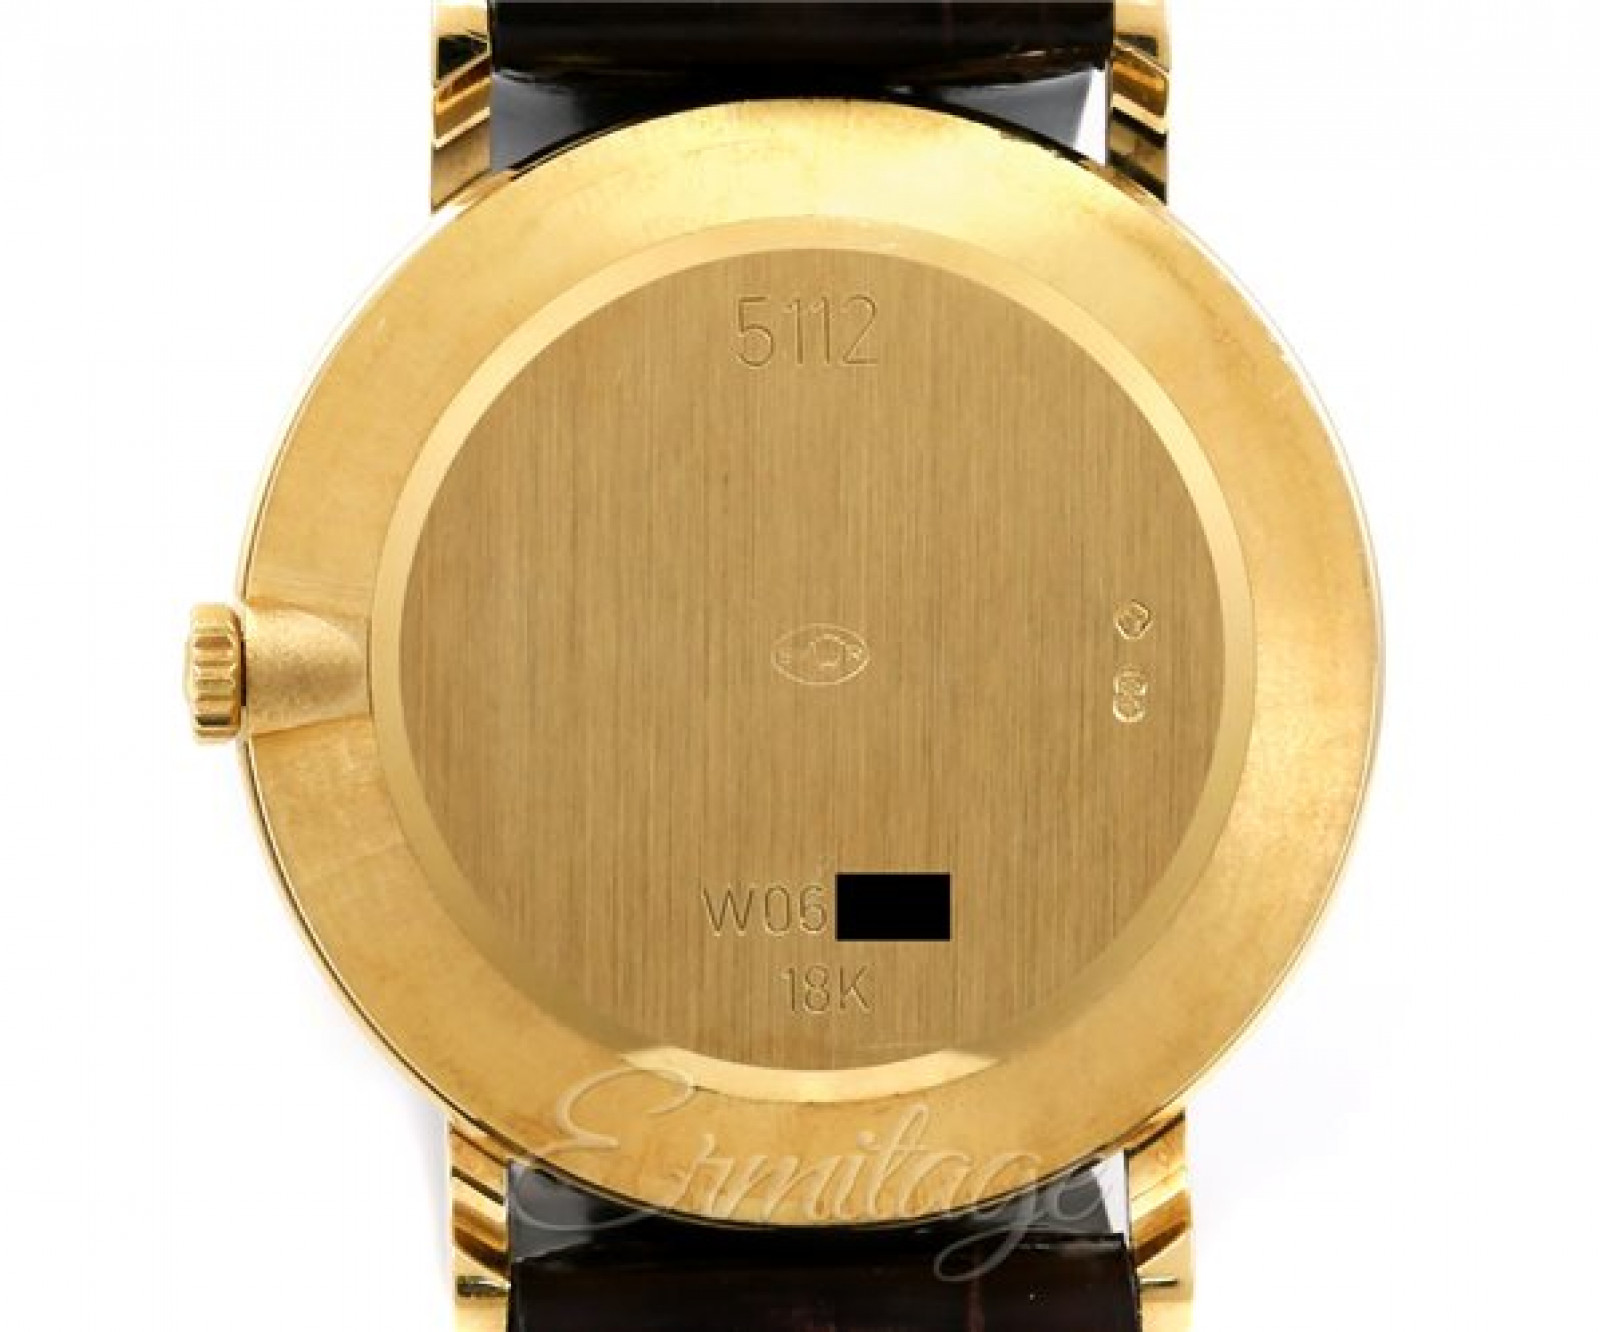 Rolex Cellini 5112 Gold Year 2000